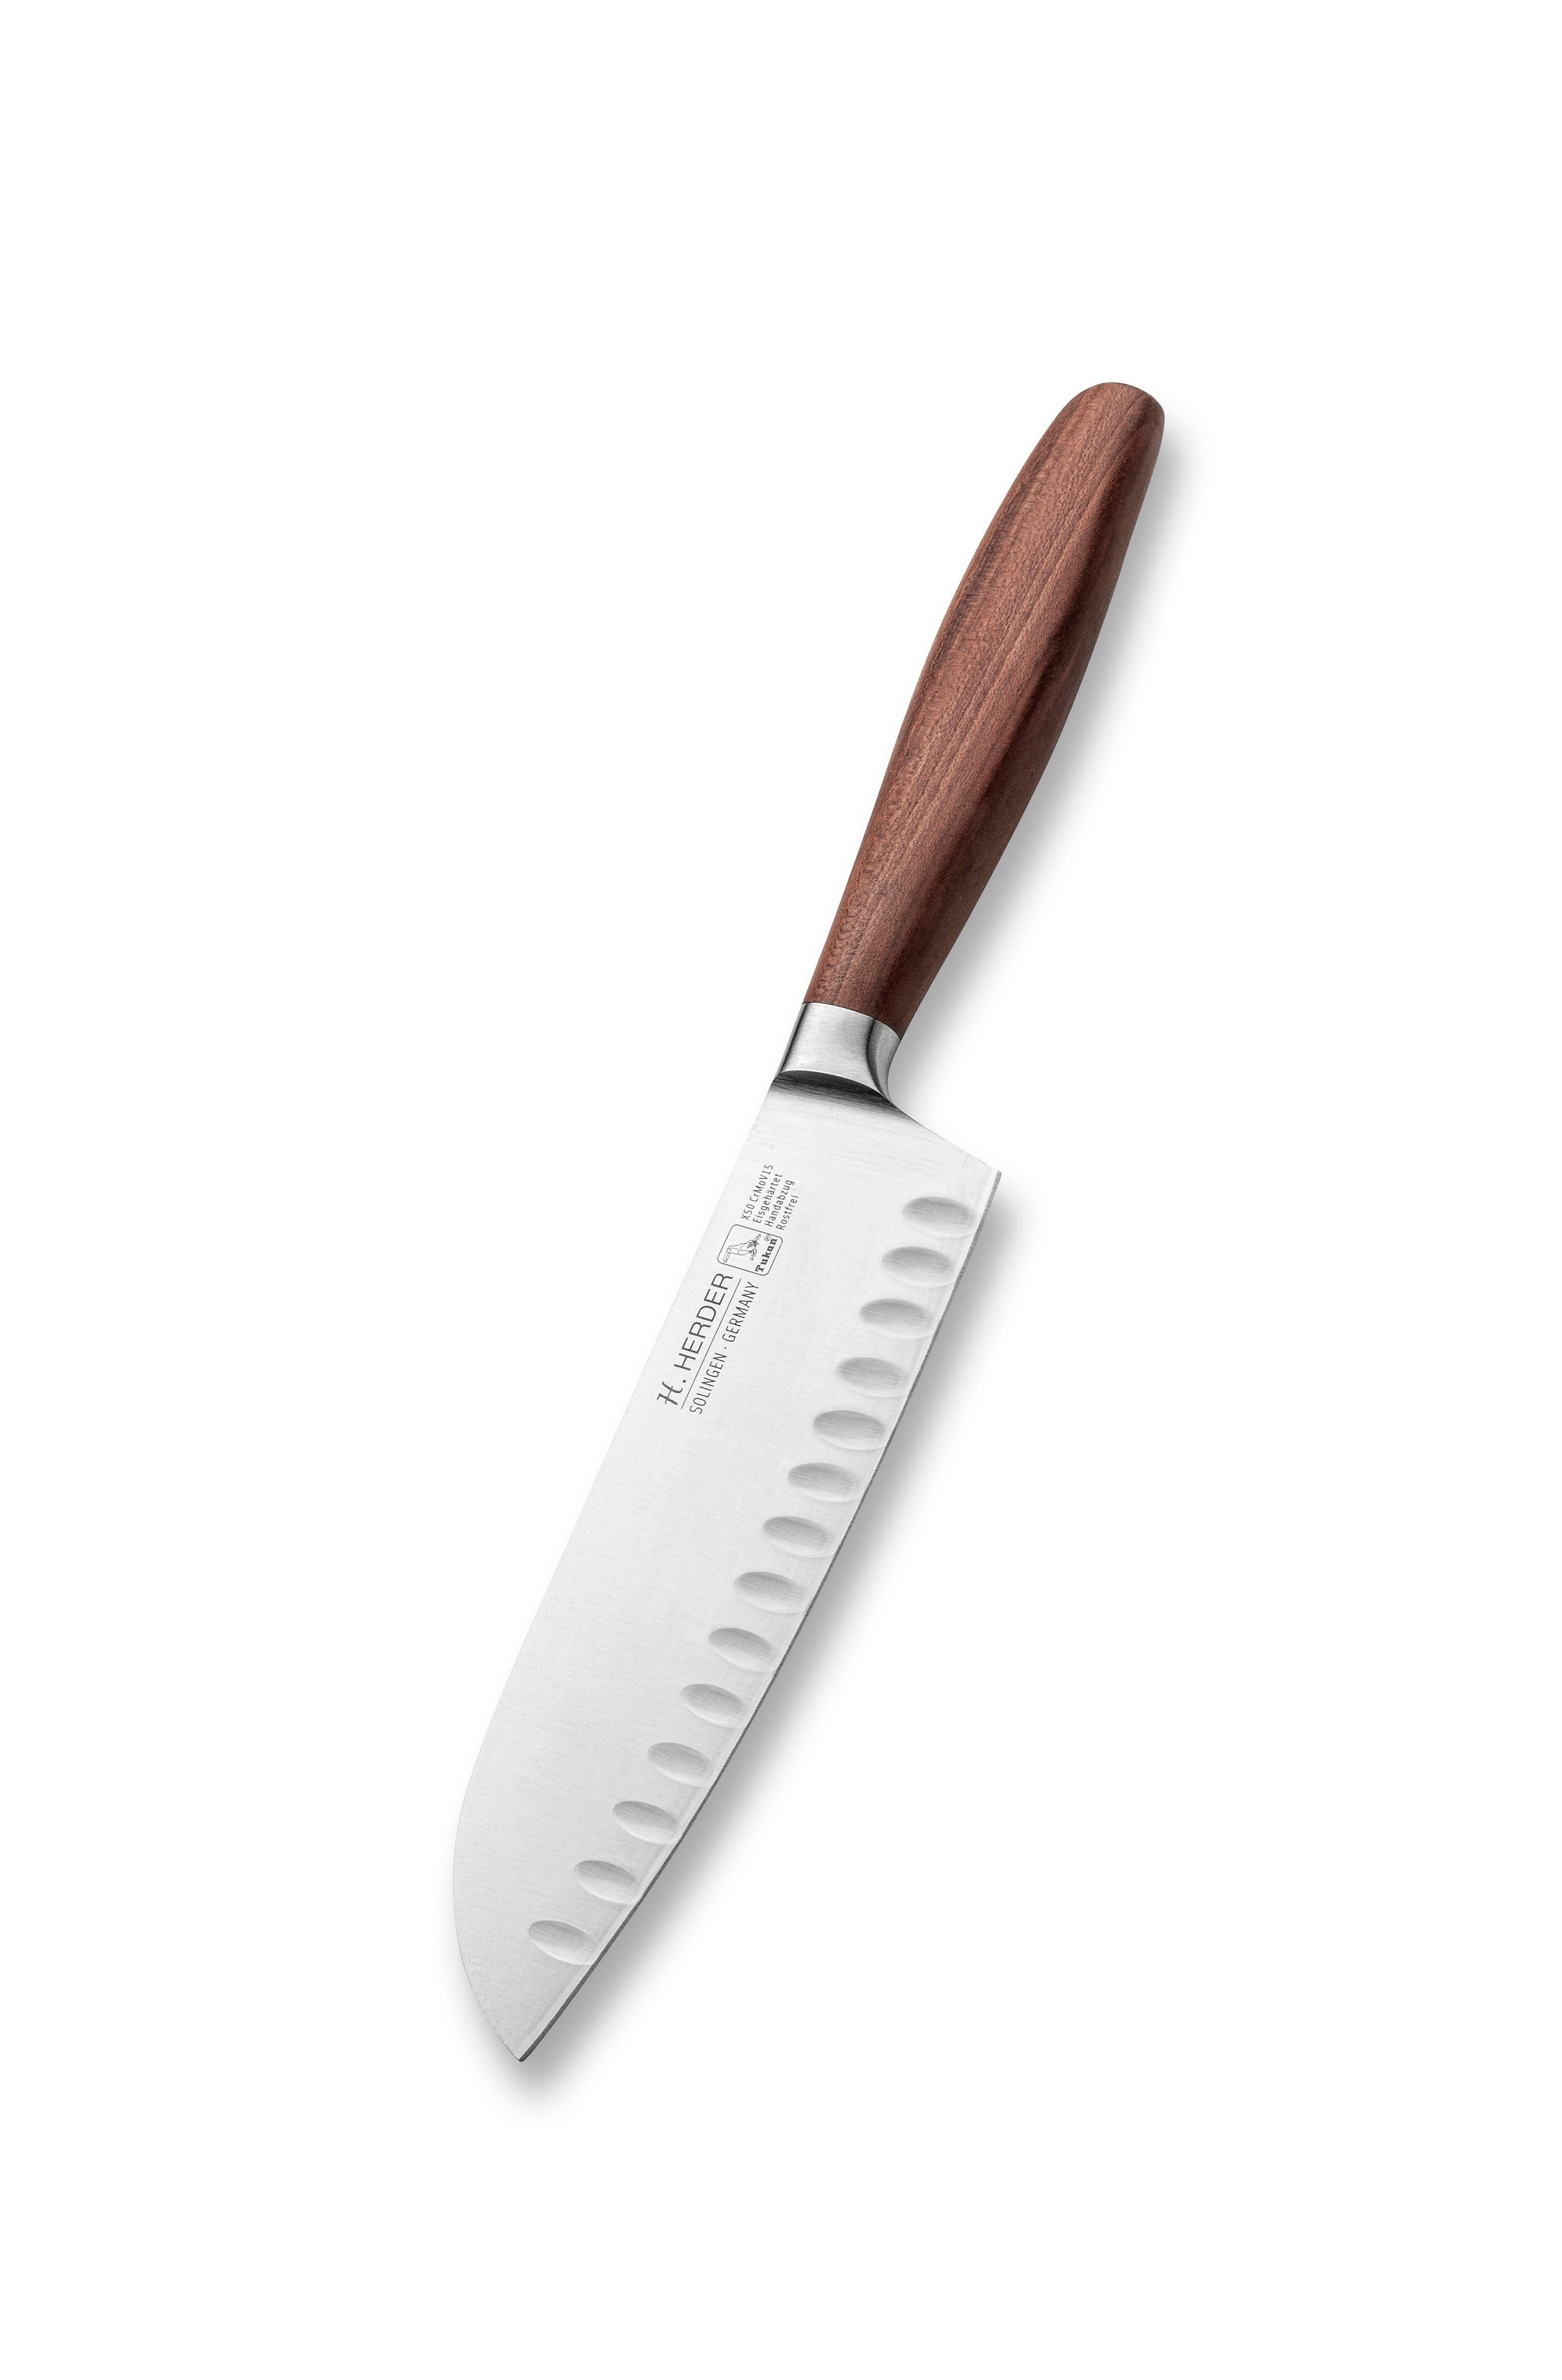 Cuchillo Santoku Eterno, madera de ciruelo, longitud de la hoja 16cm, forjado, filo estriado